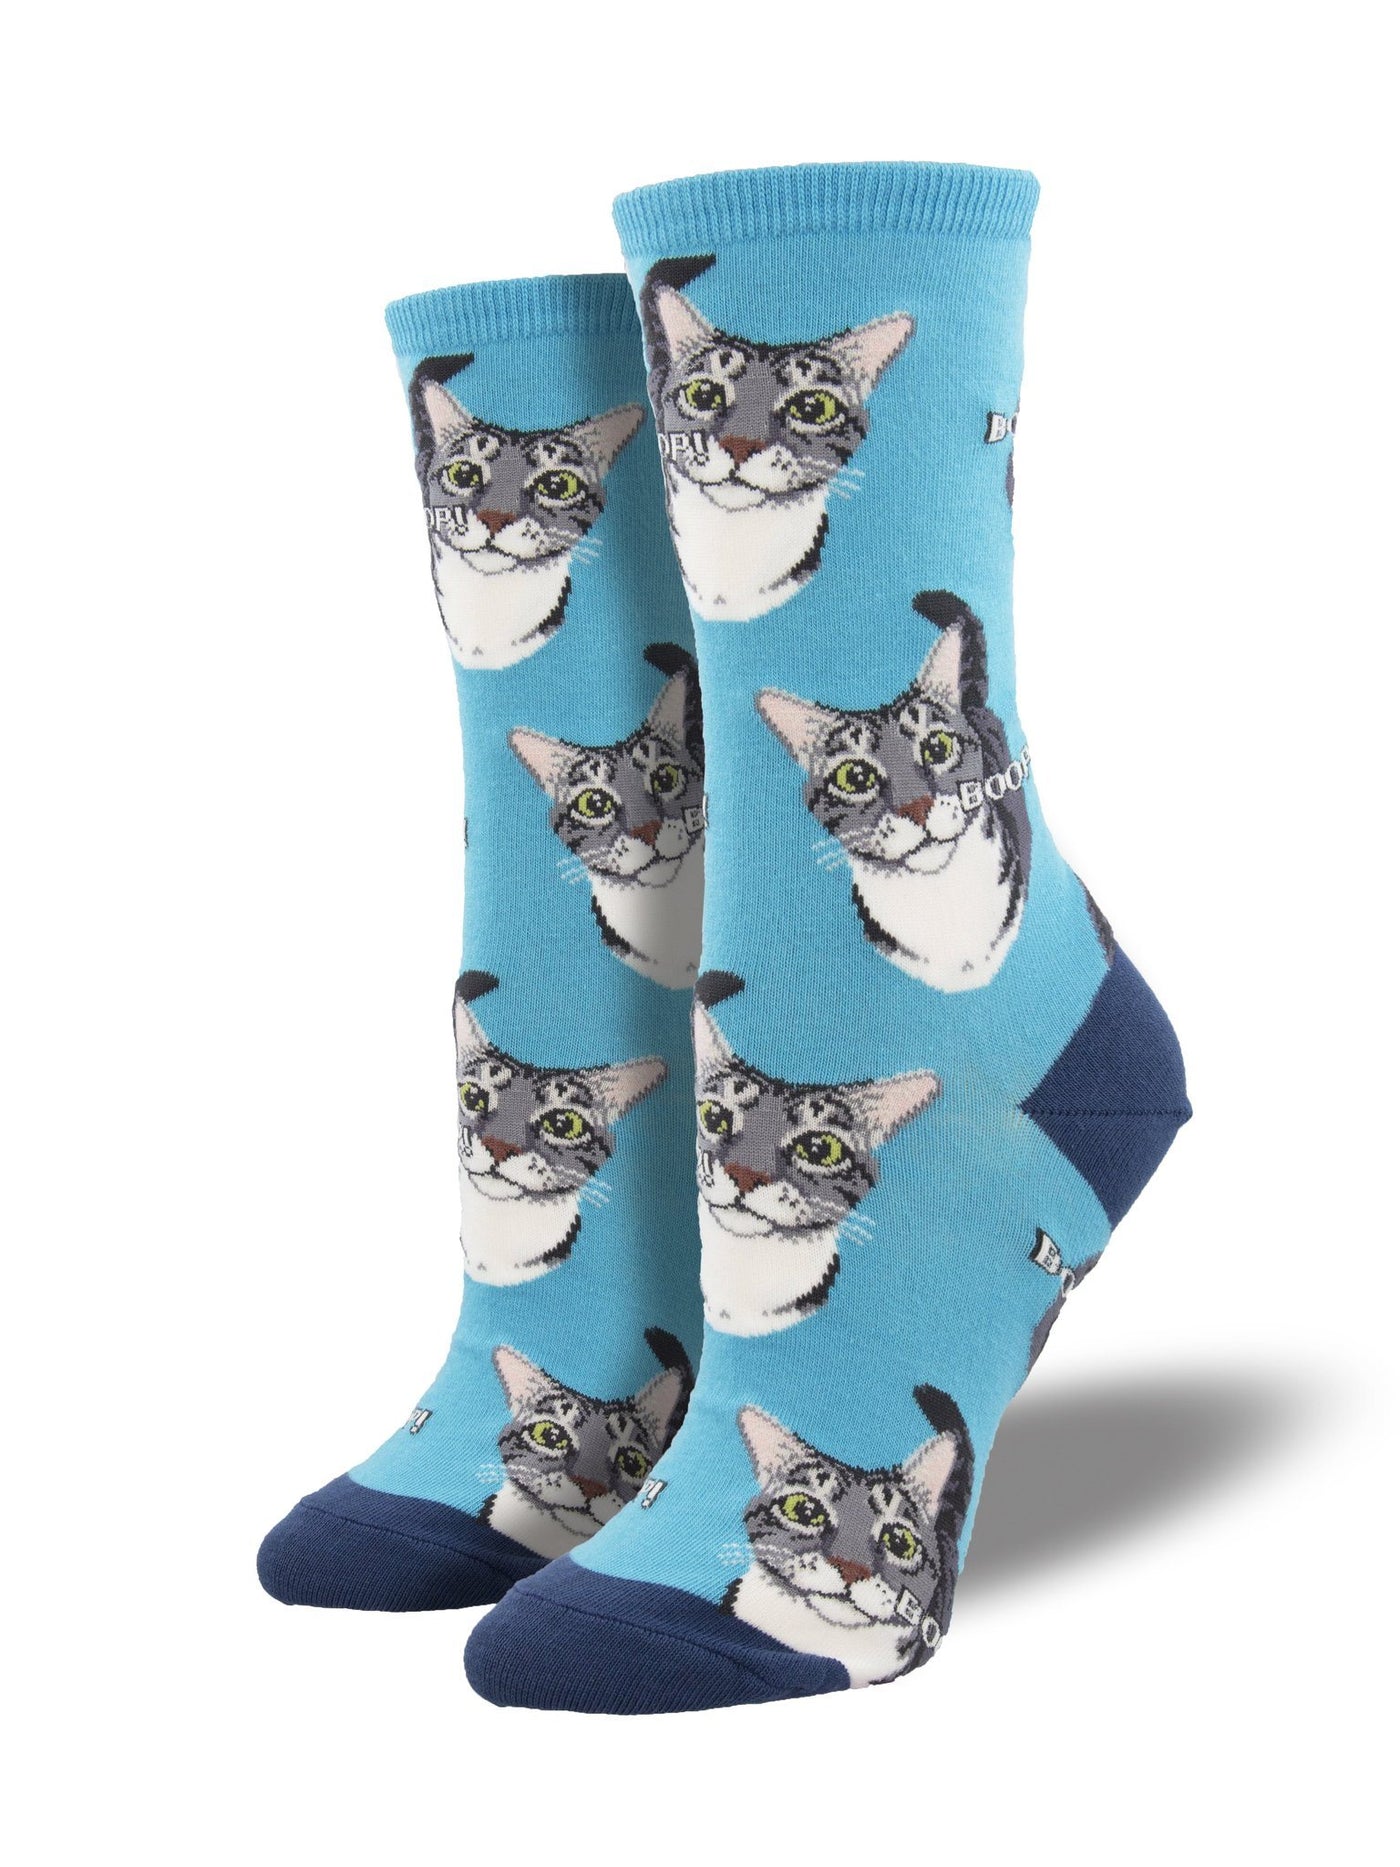 Socksmith - "Boop" Cat's Nose Crew Socks | Women's - Knock Your Socks Off